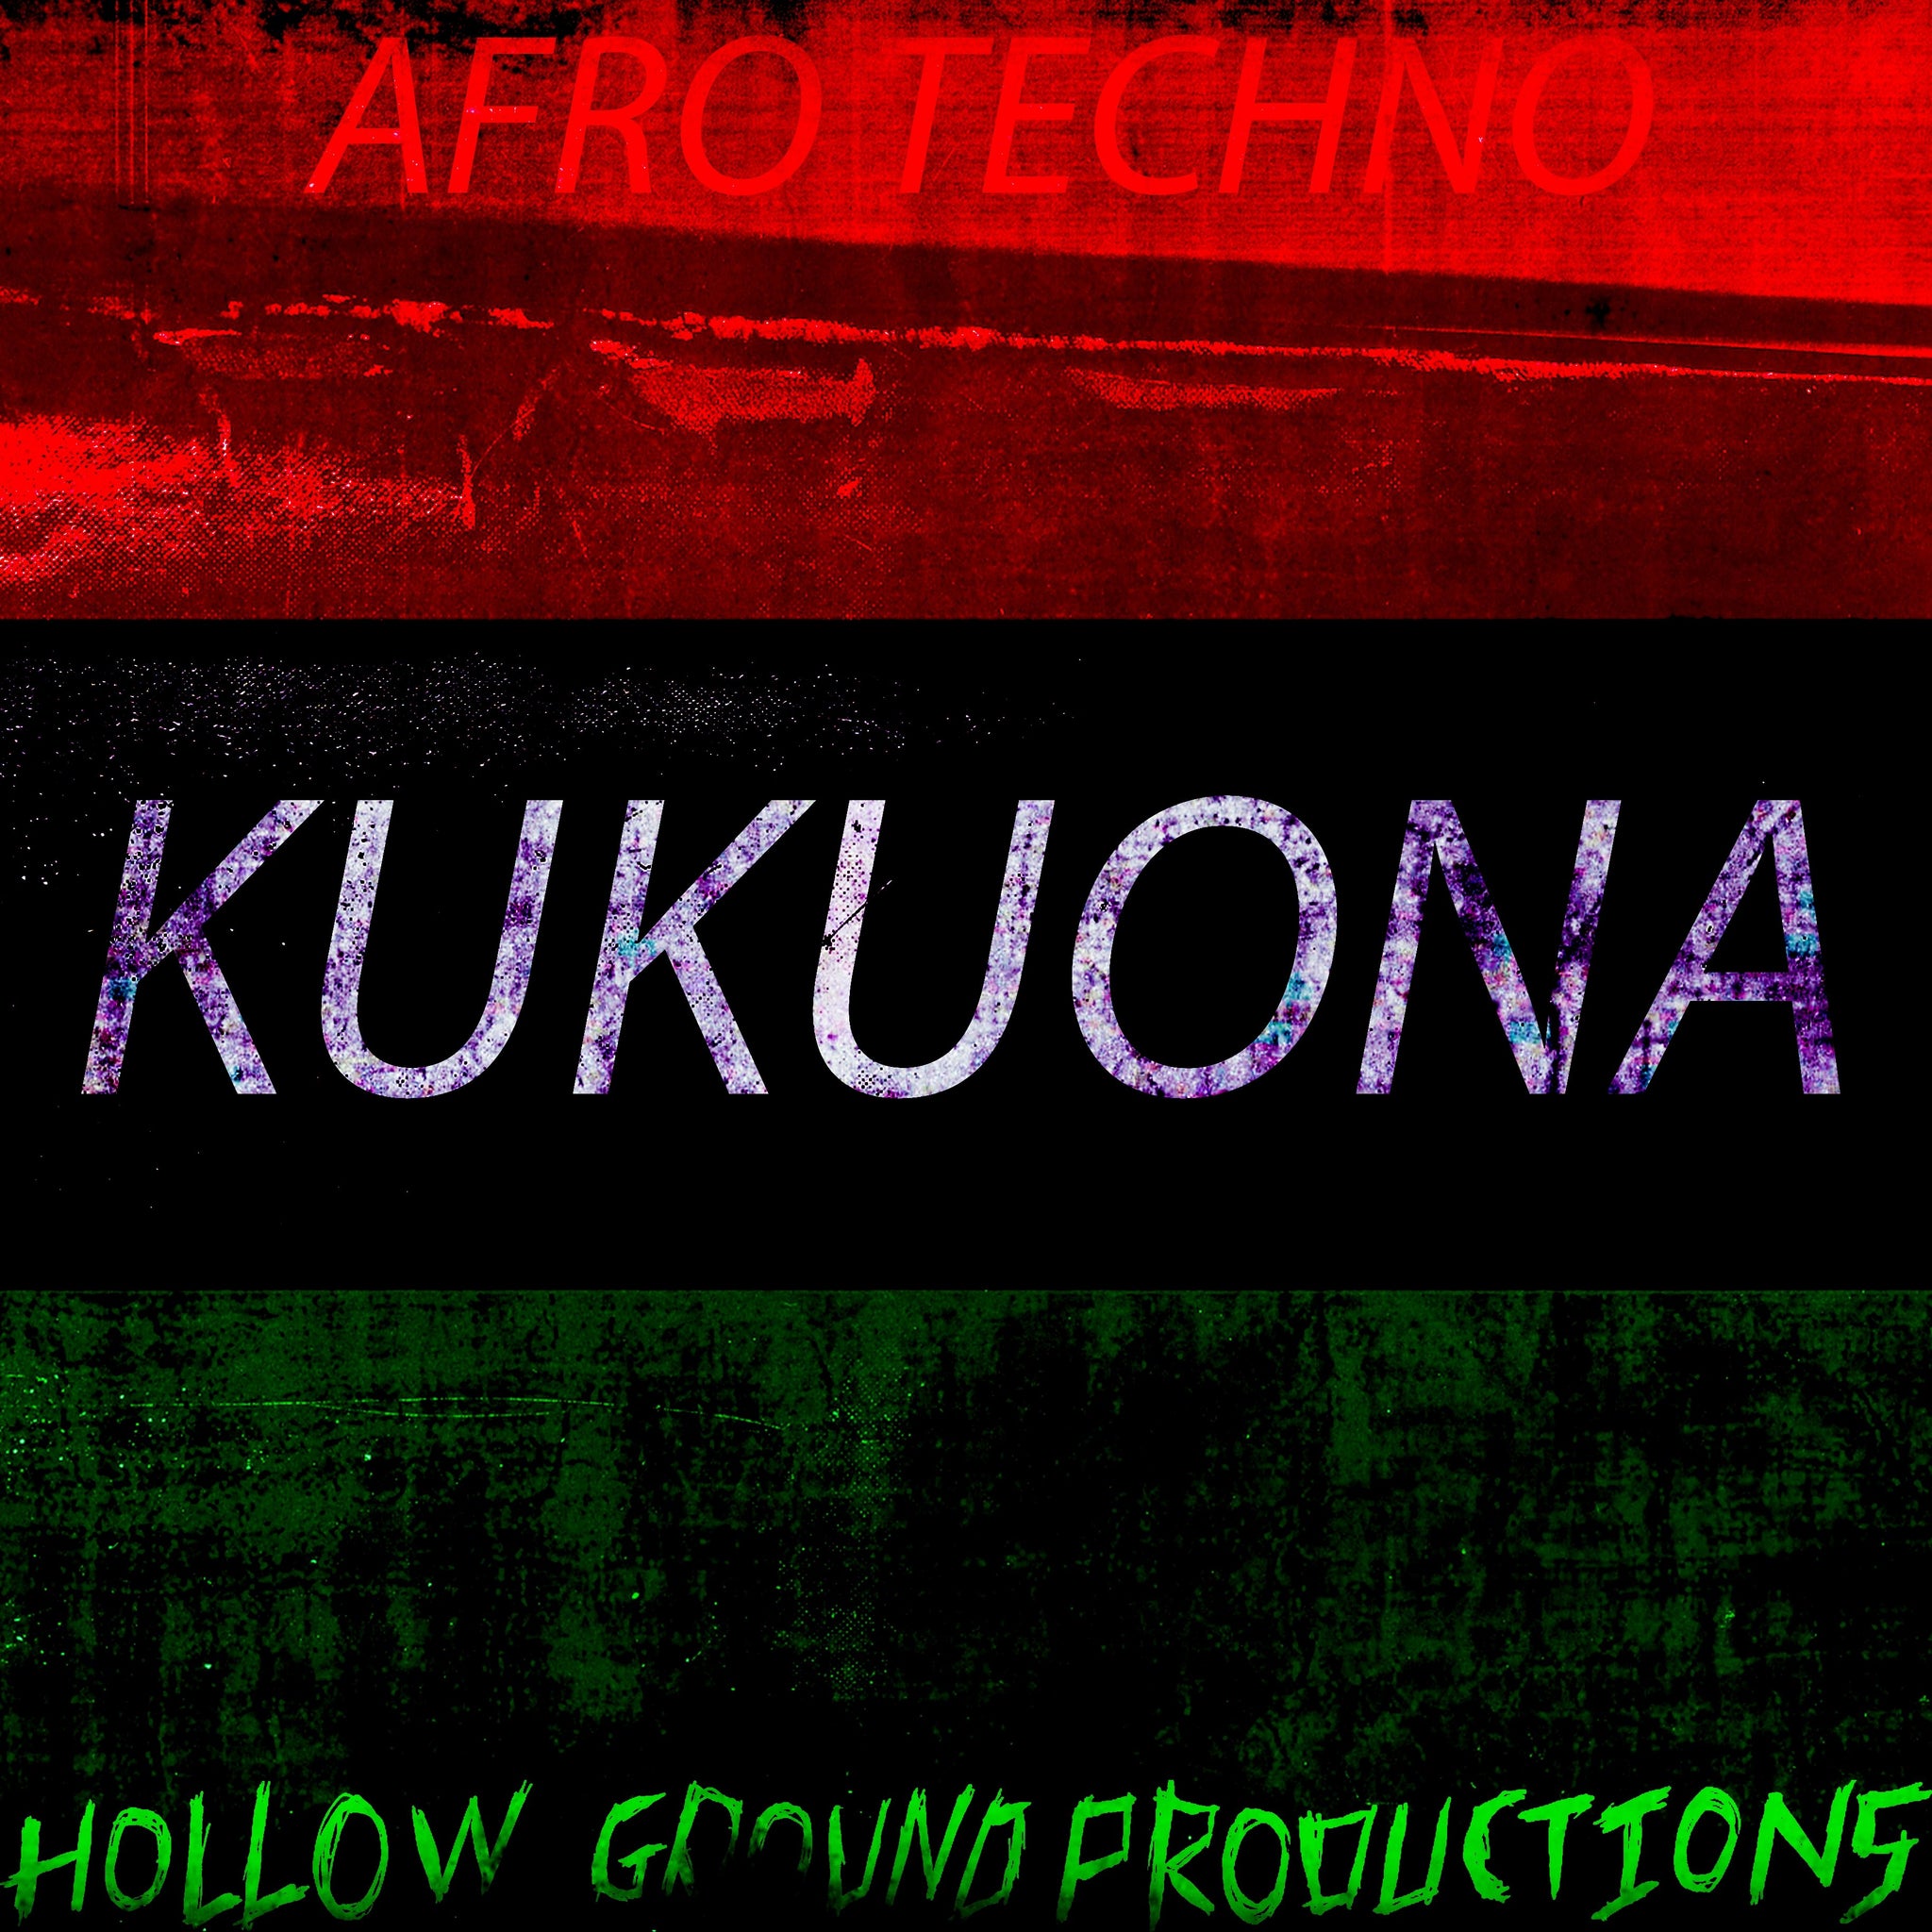 Kukuona - Hollow Ground Productions (Wukah) - Scraps Audio